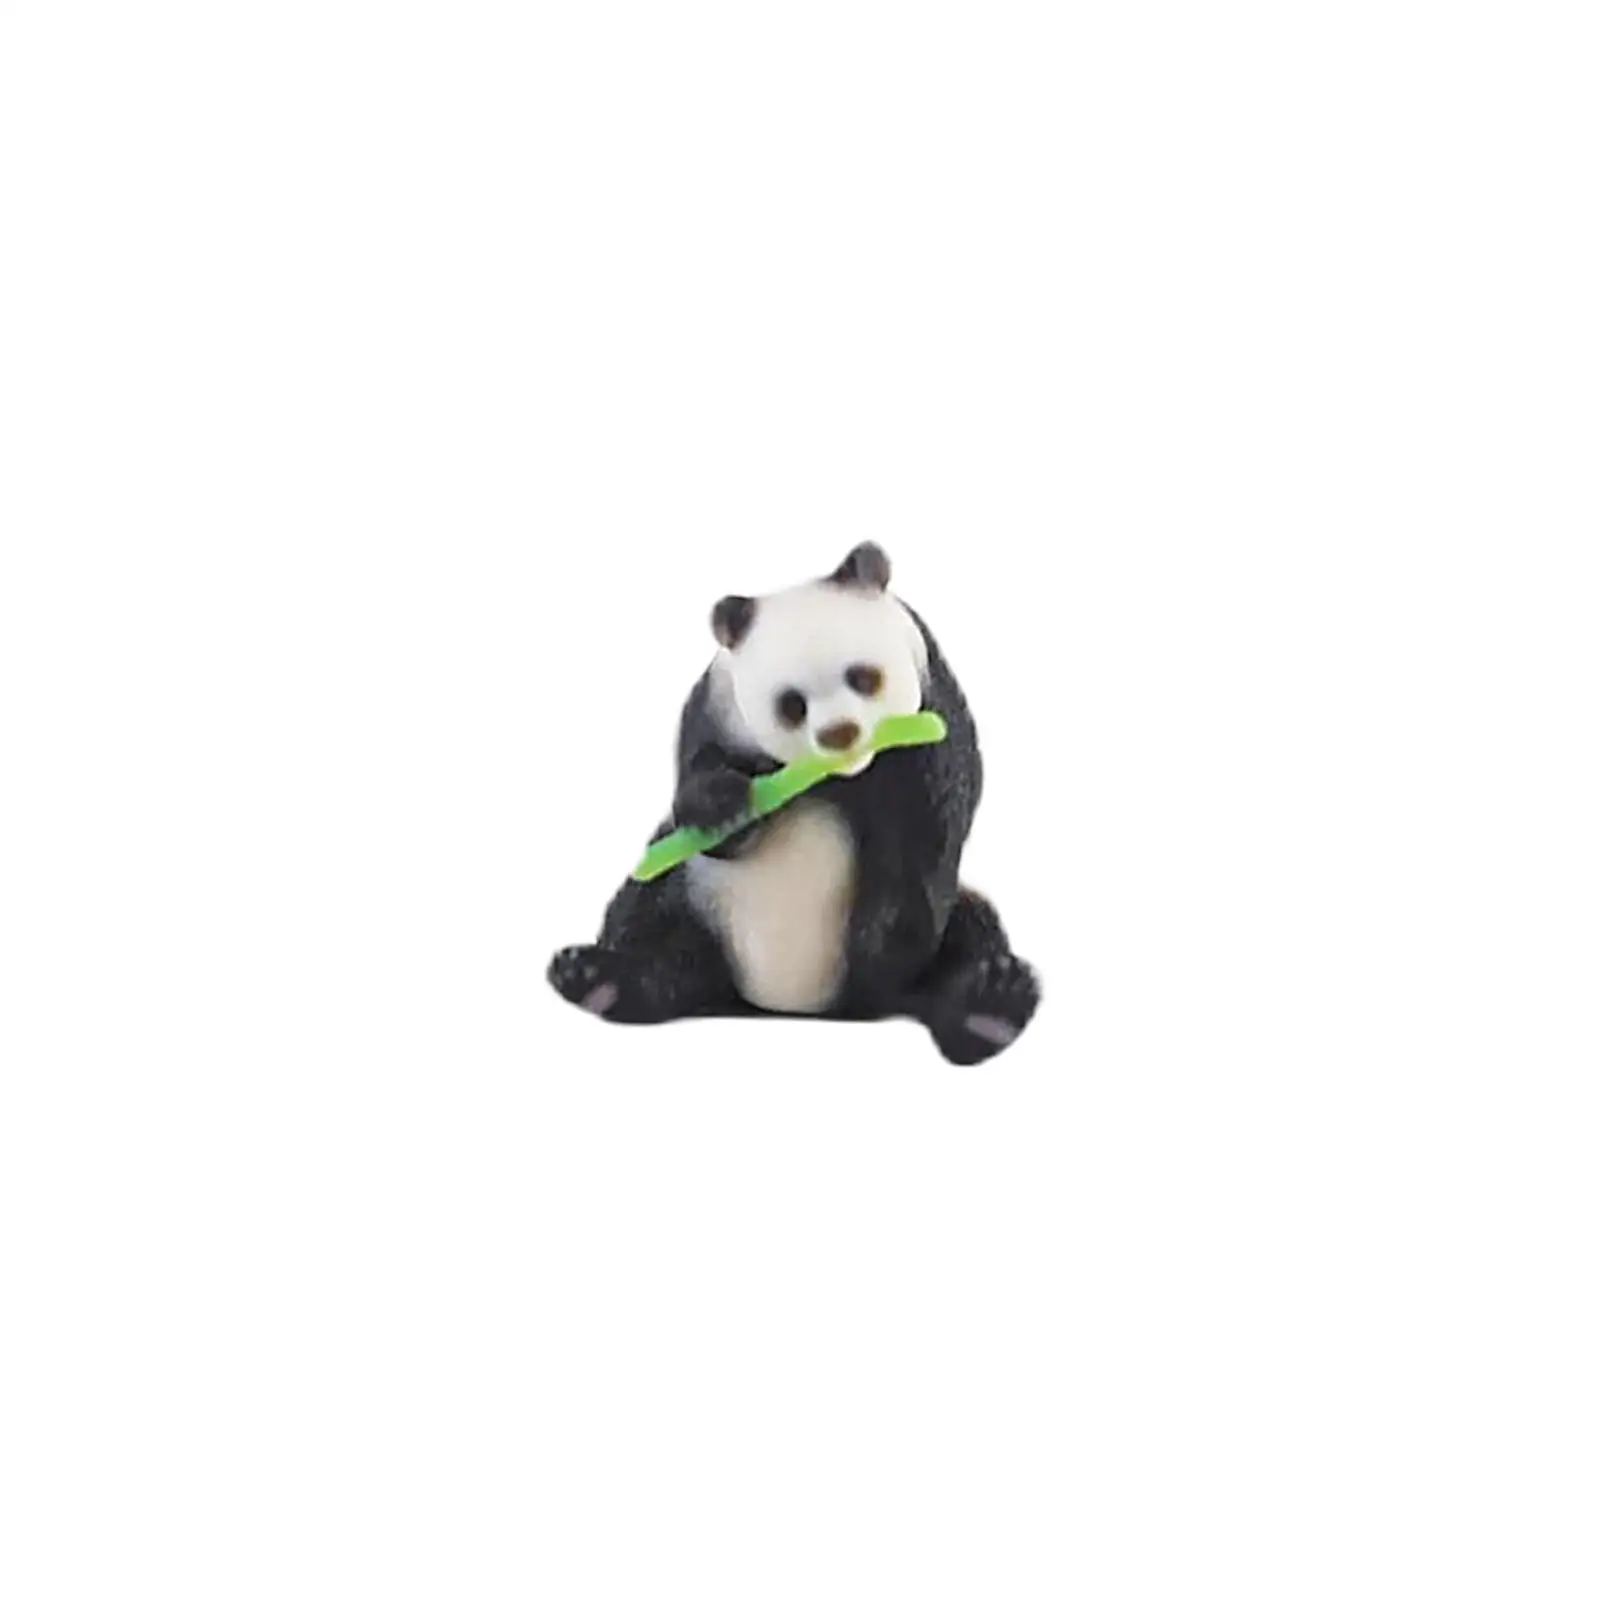 Mini Fairy Garden Panda Statue 1:64 Scale Party Cute Tiny Pandas Model Decor